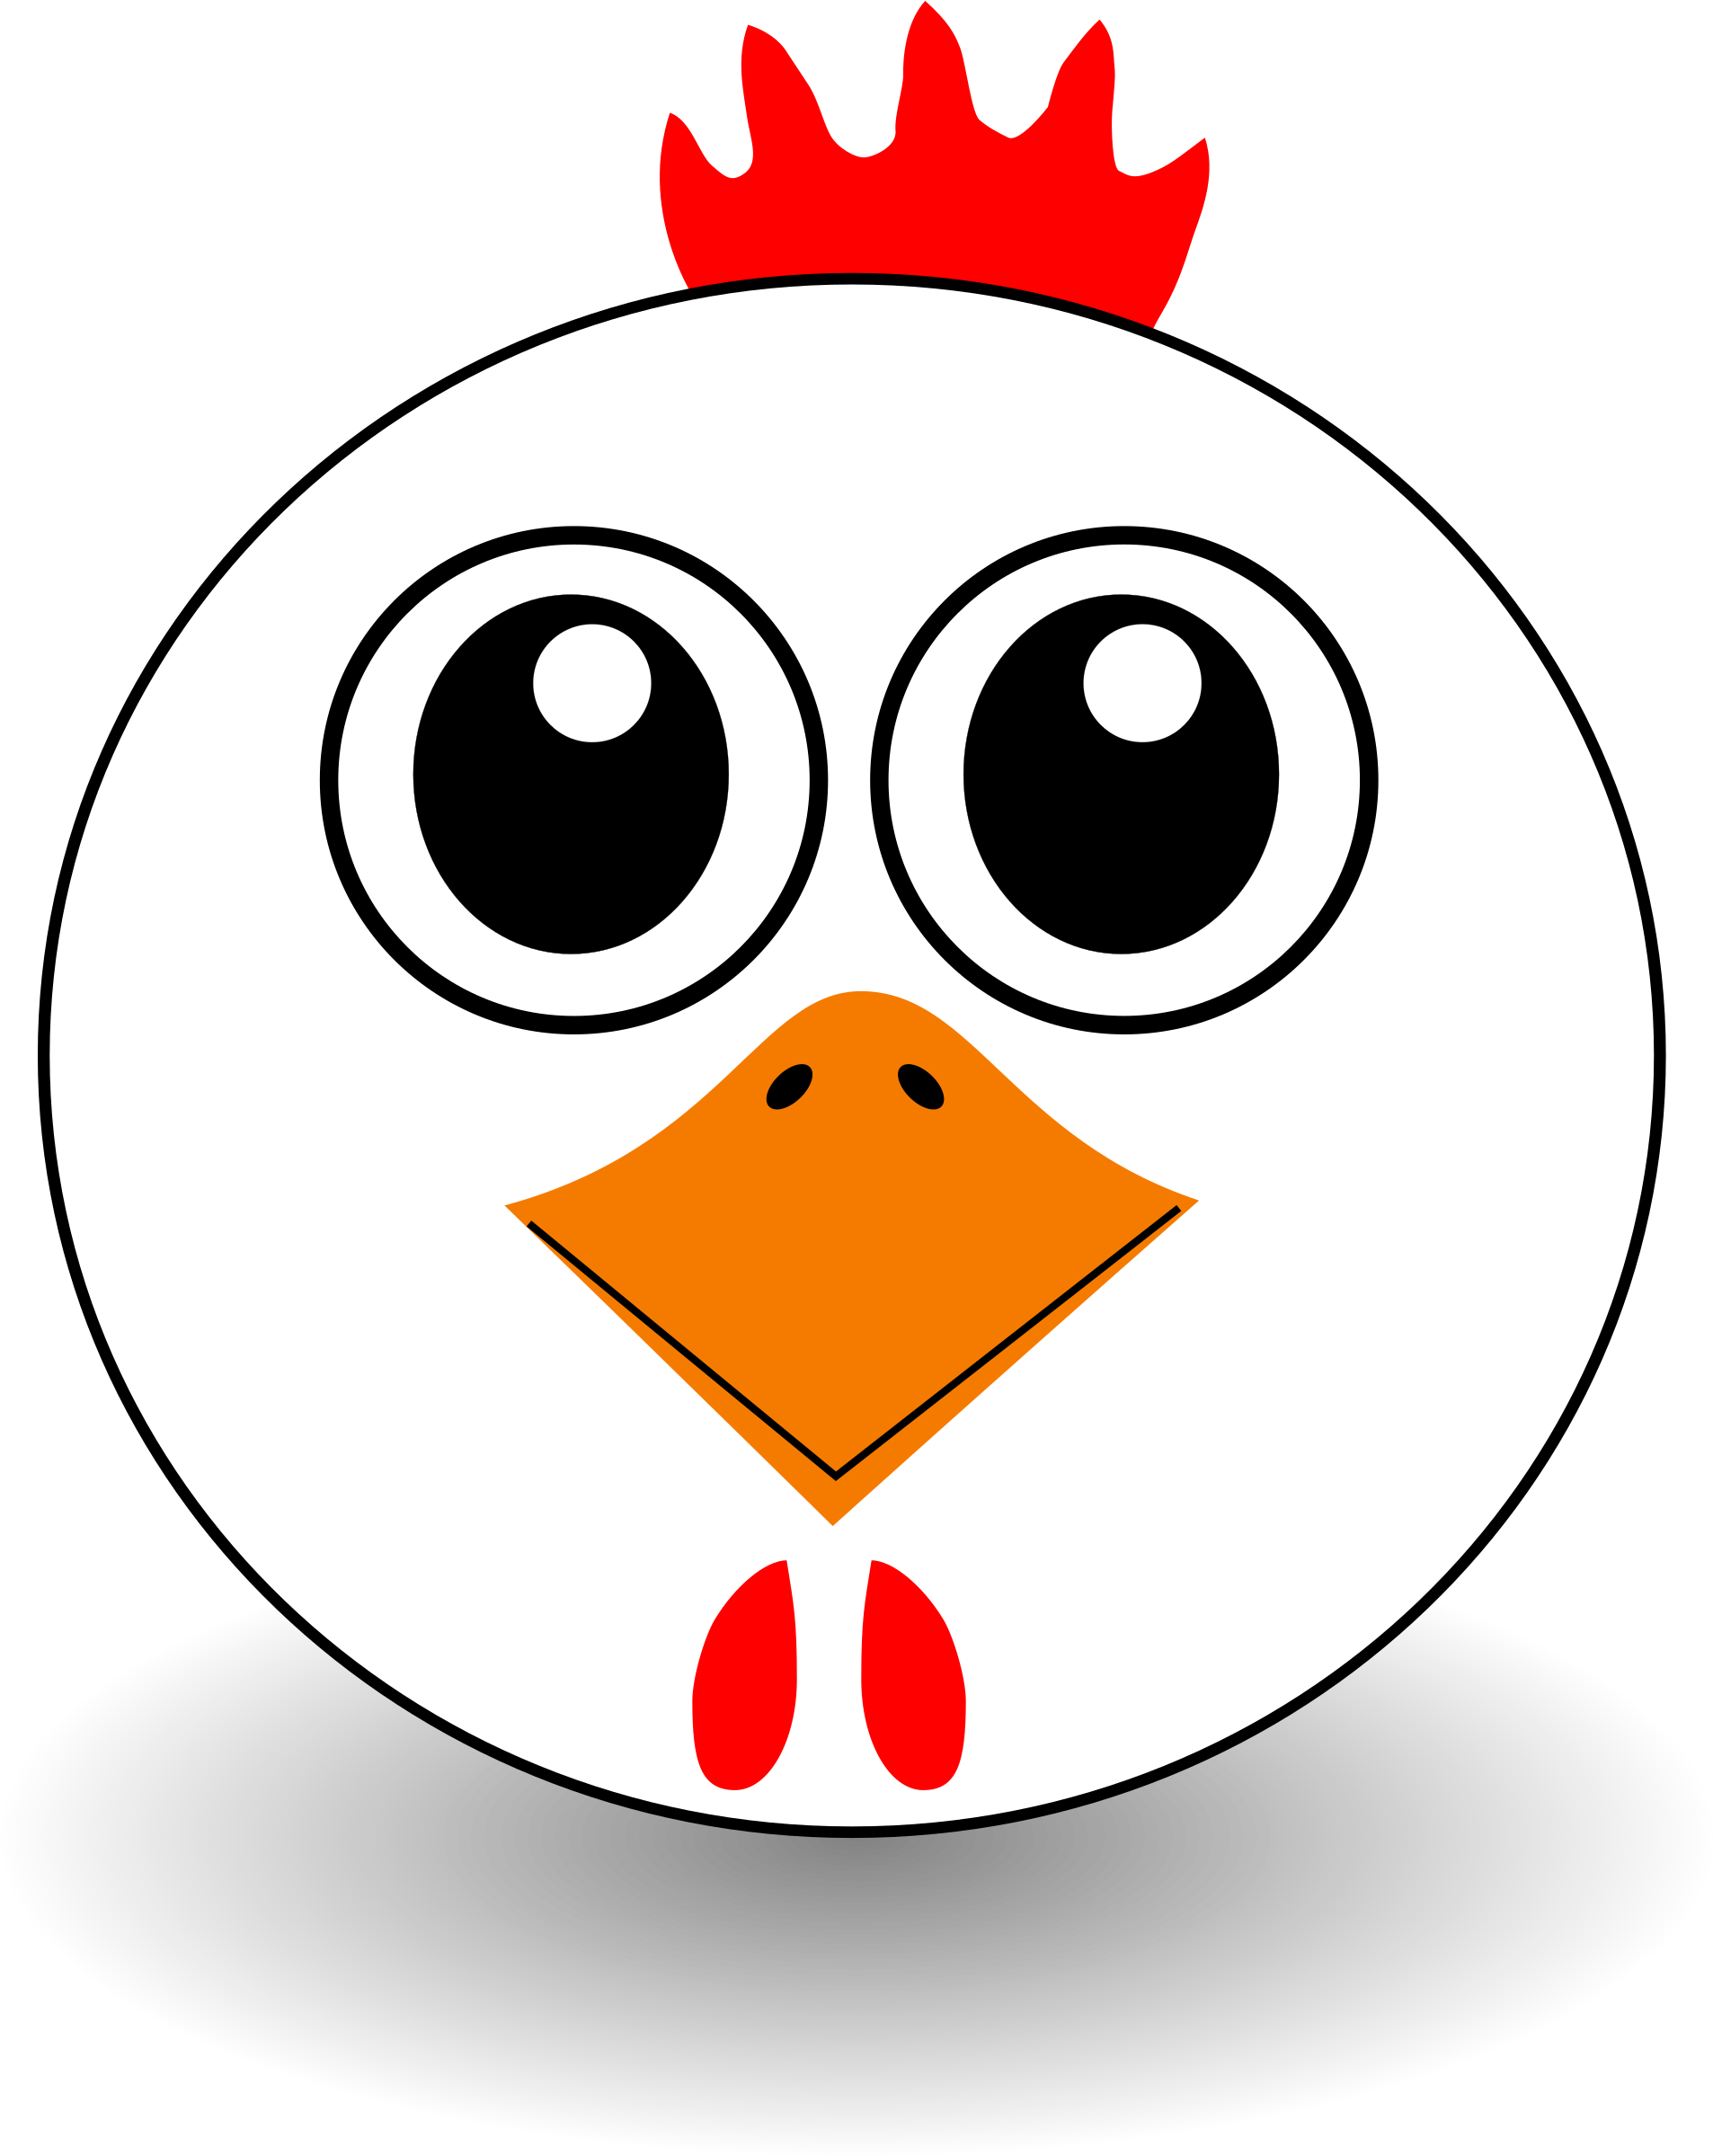 Big Image - Cute Chicken Face Cartoon (1915x2400)